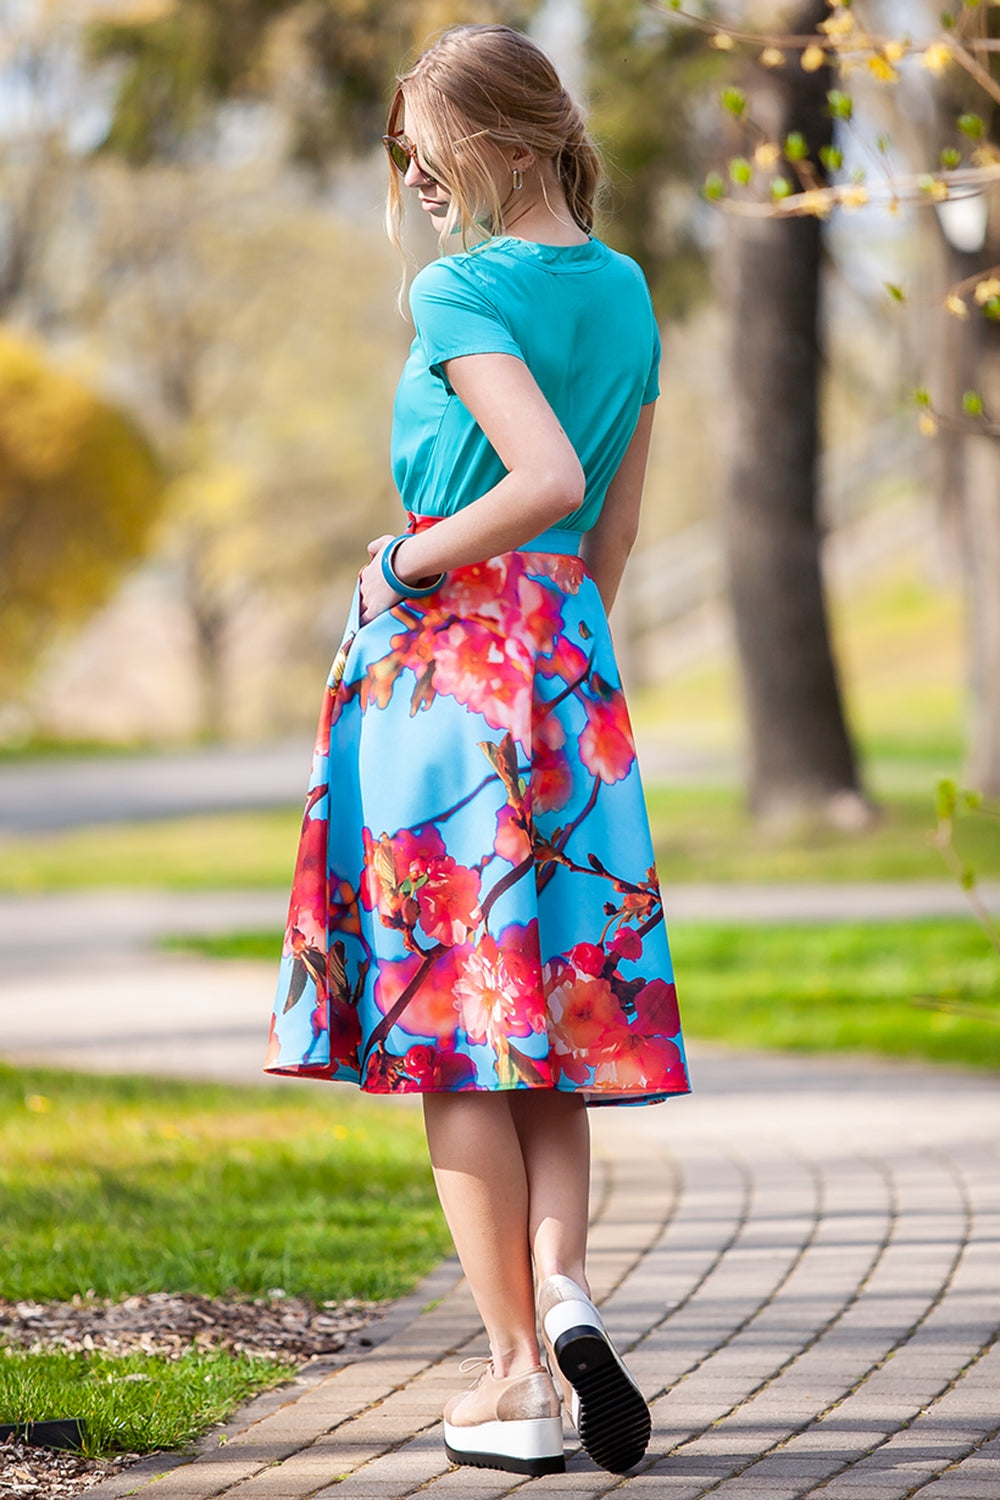 Turquoise circle skirt with side pockets and sakura print